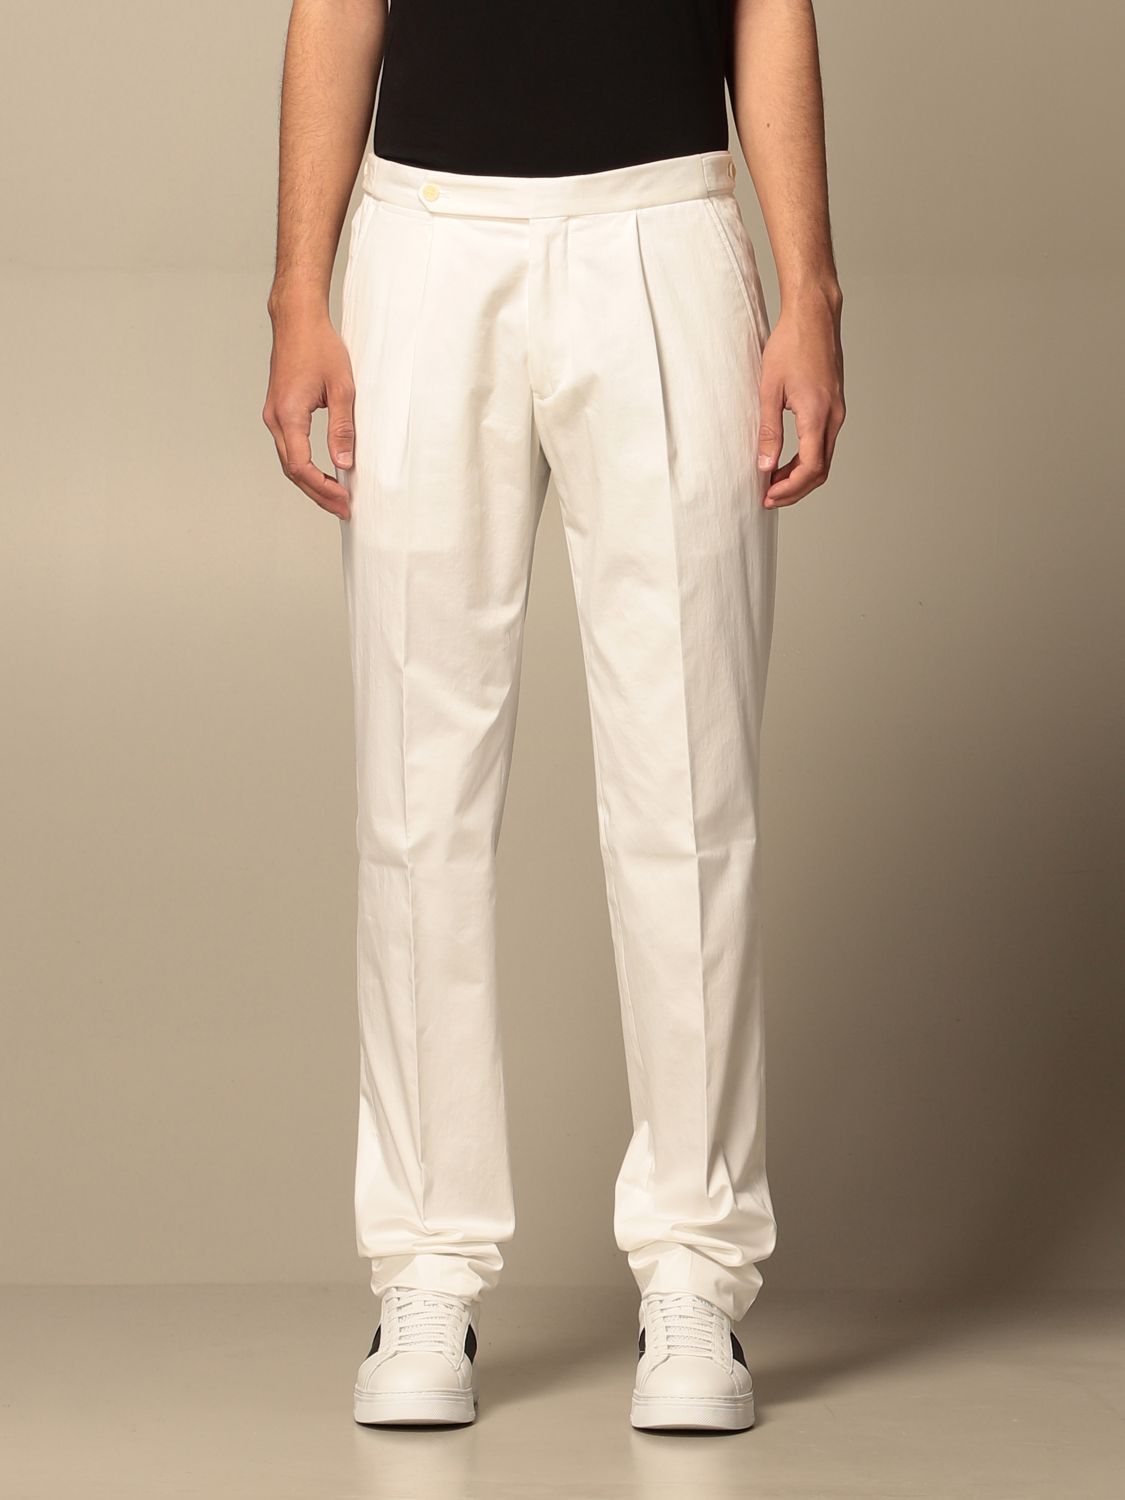 EMPORIO ARMANI: Chino trousers in cotton - White | Emporio Armani pants  A1P910 A1577 online on 